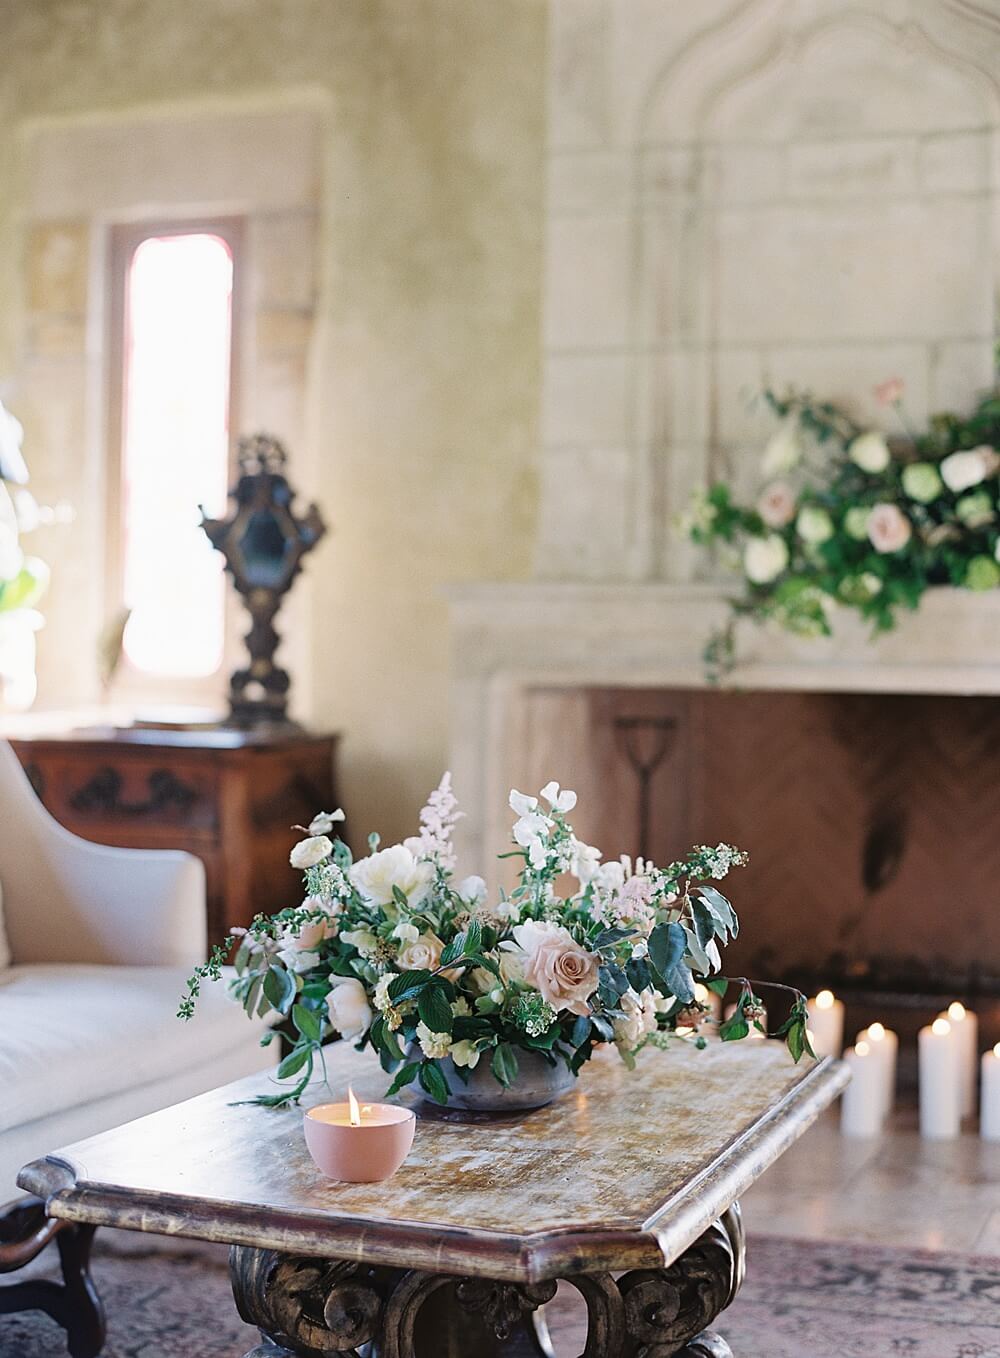 Romantic floral centerpiece in lounge at Cal-a-vie spa - Jacqueline Benét Photography